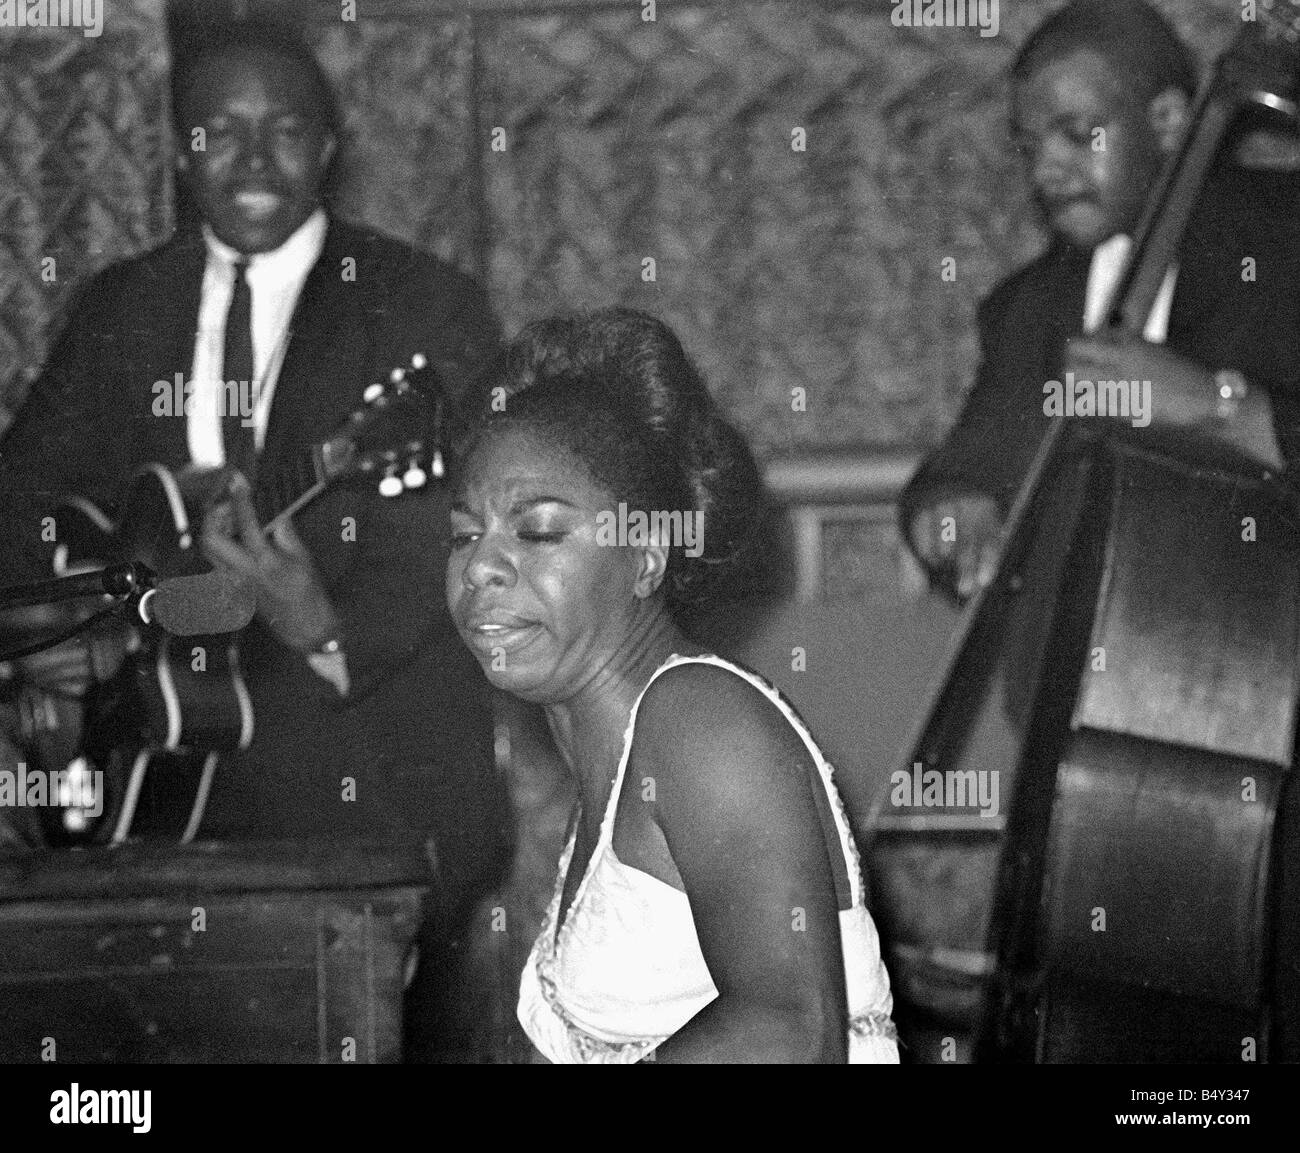 Nina Simone playing the piano (1965)